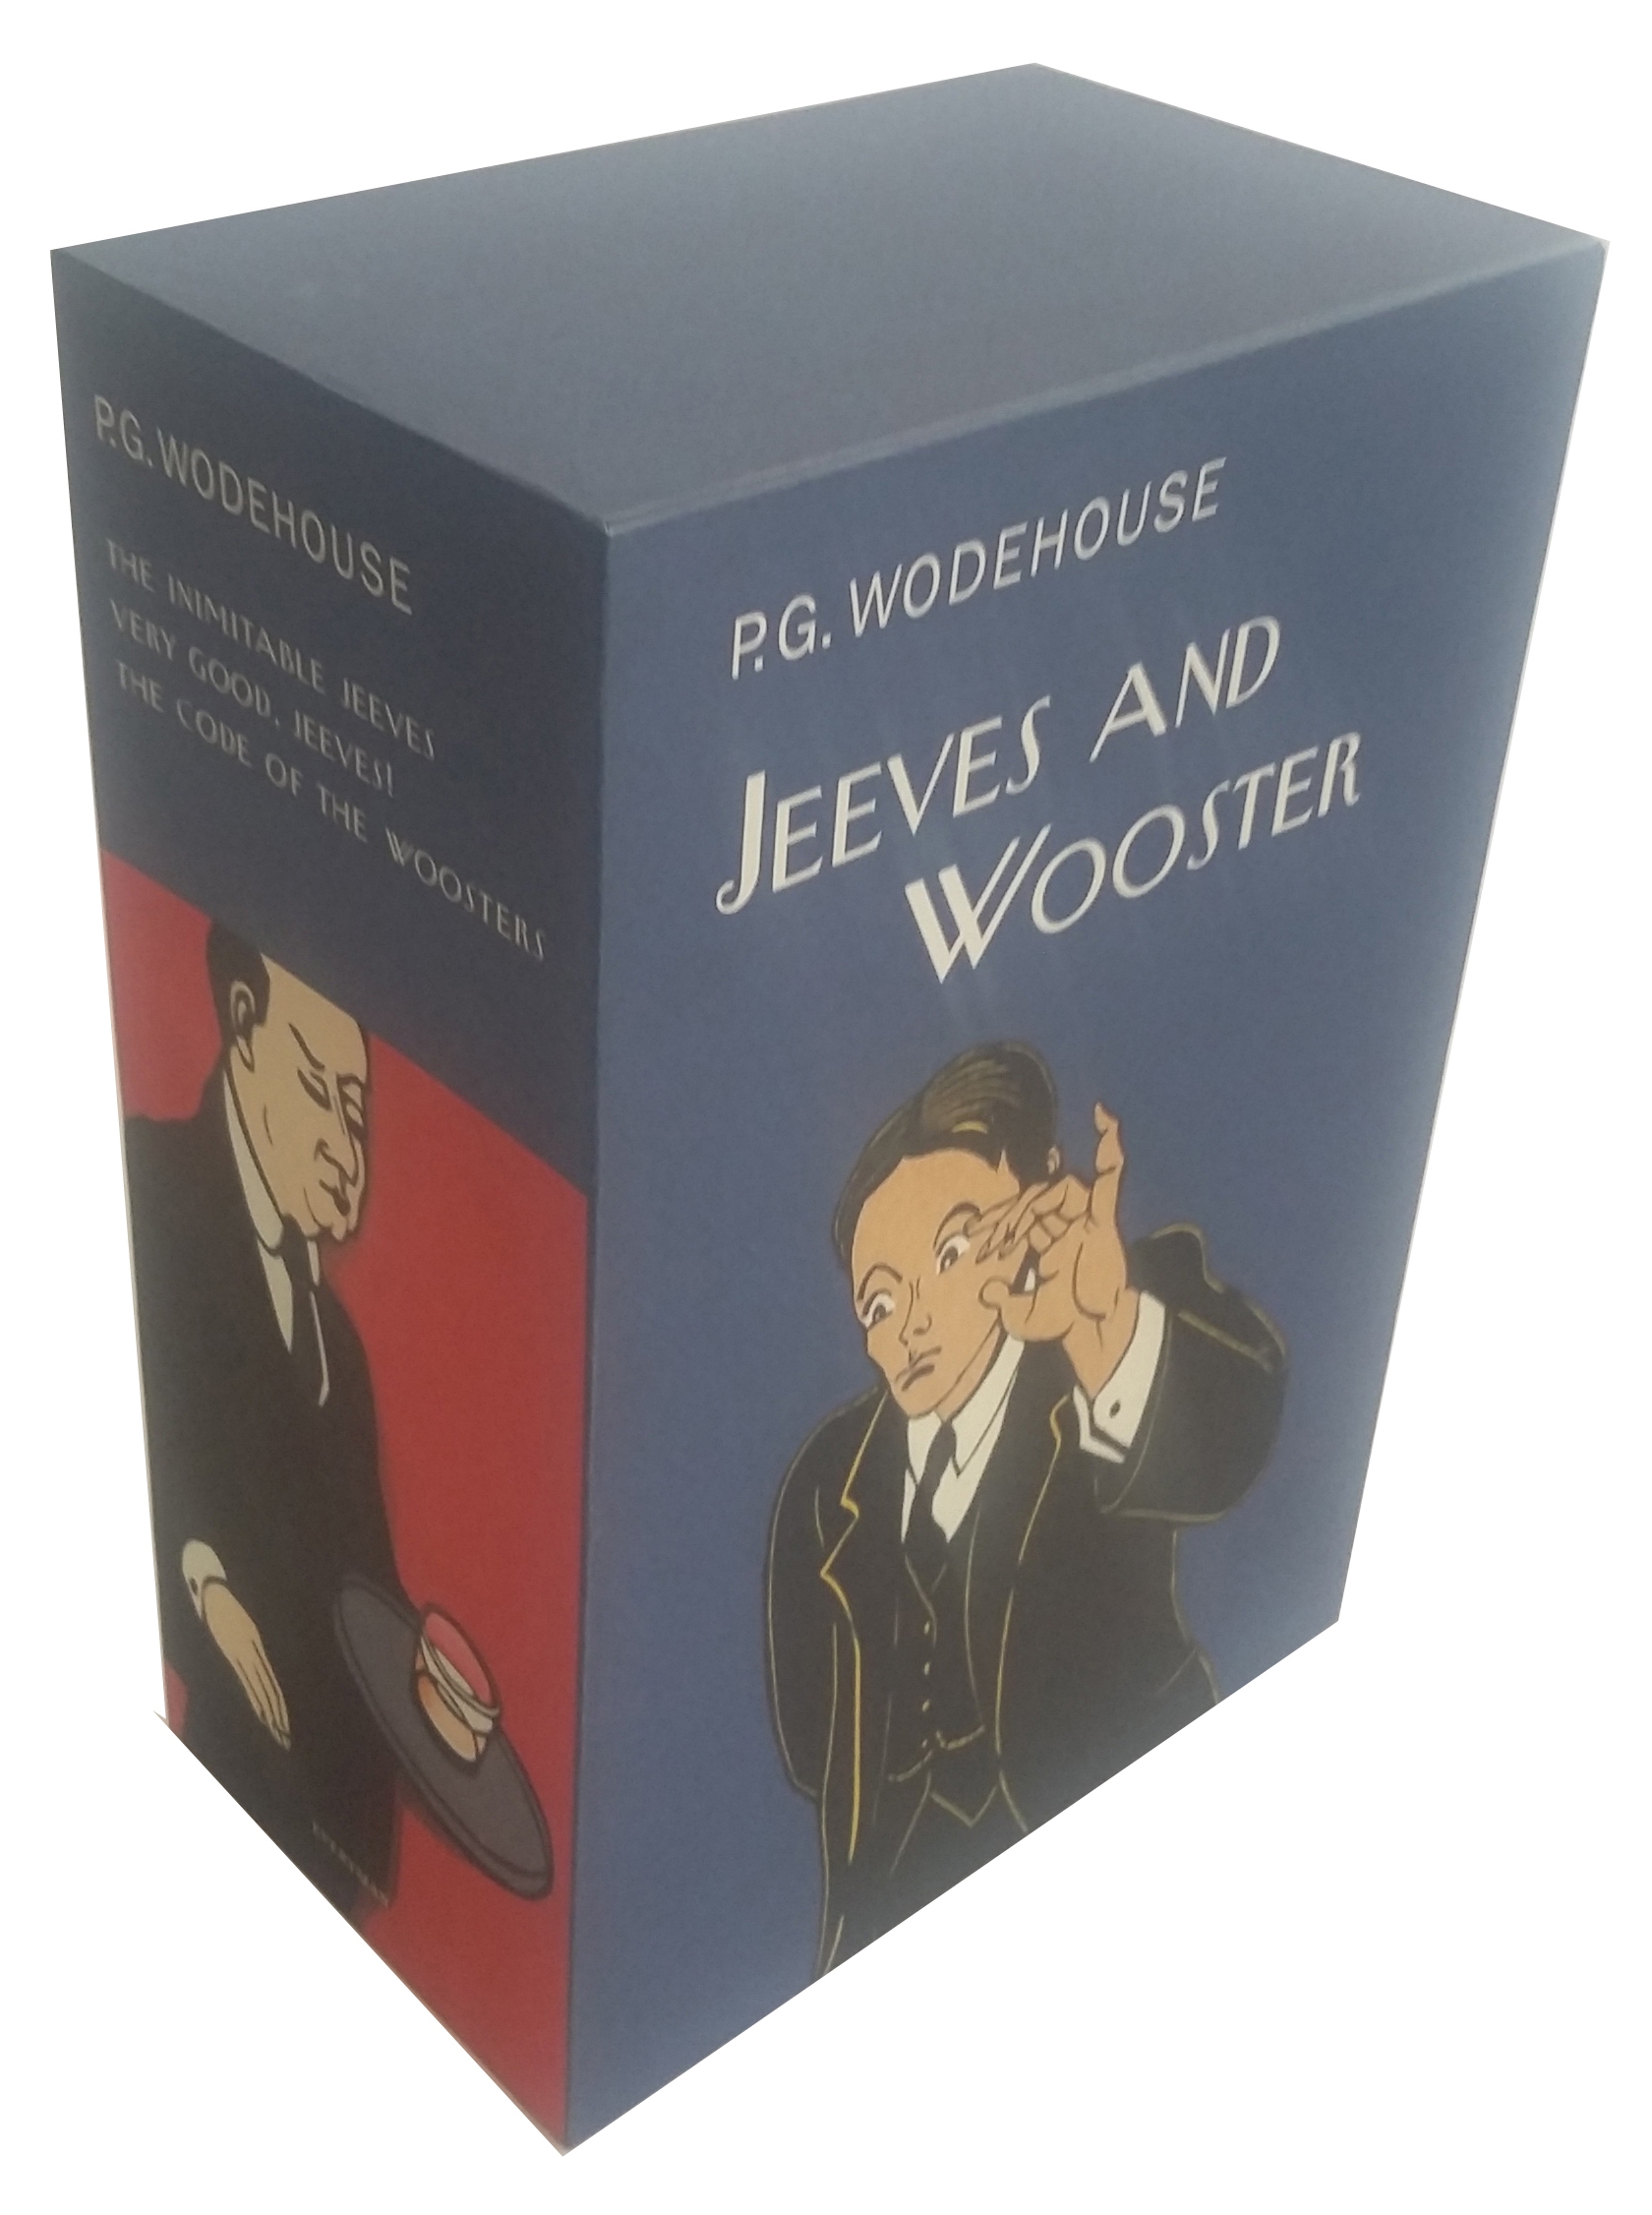 Wodehouse Jeeves Boxset by P.G. Wodehouse - Penguin Books Australia